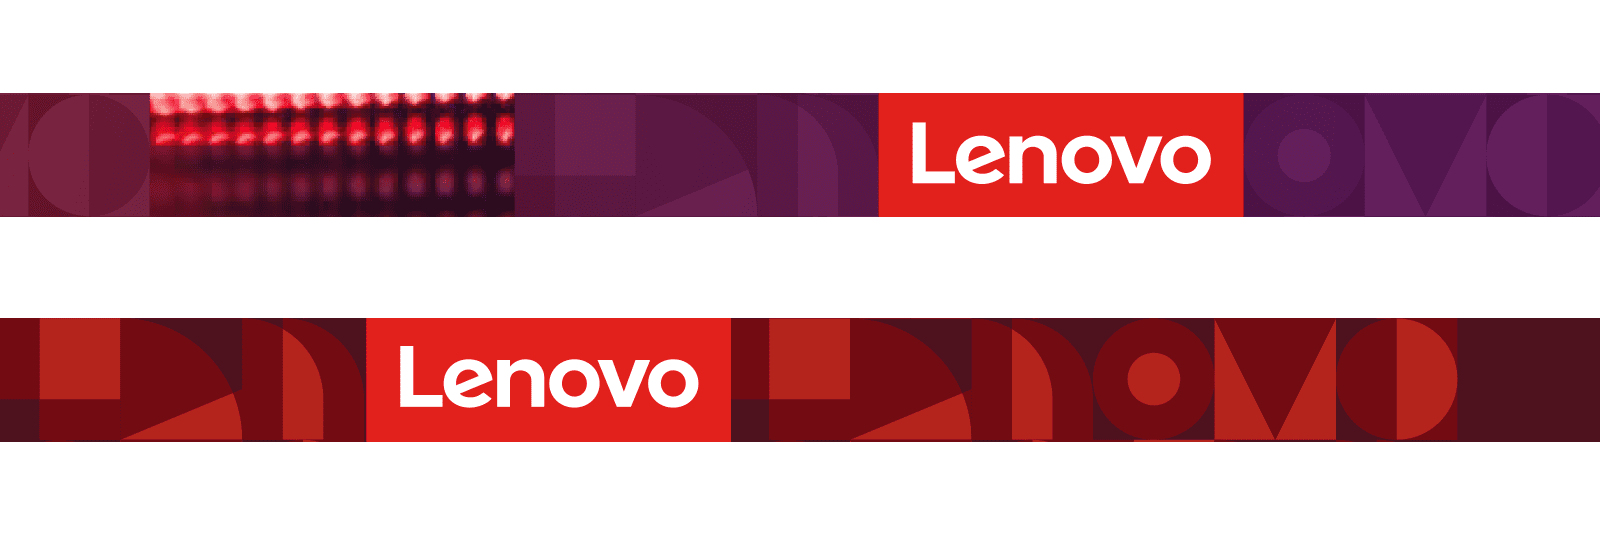 portion of Lenovo brand lanyards